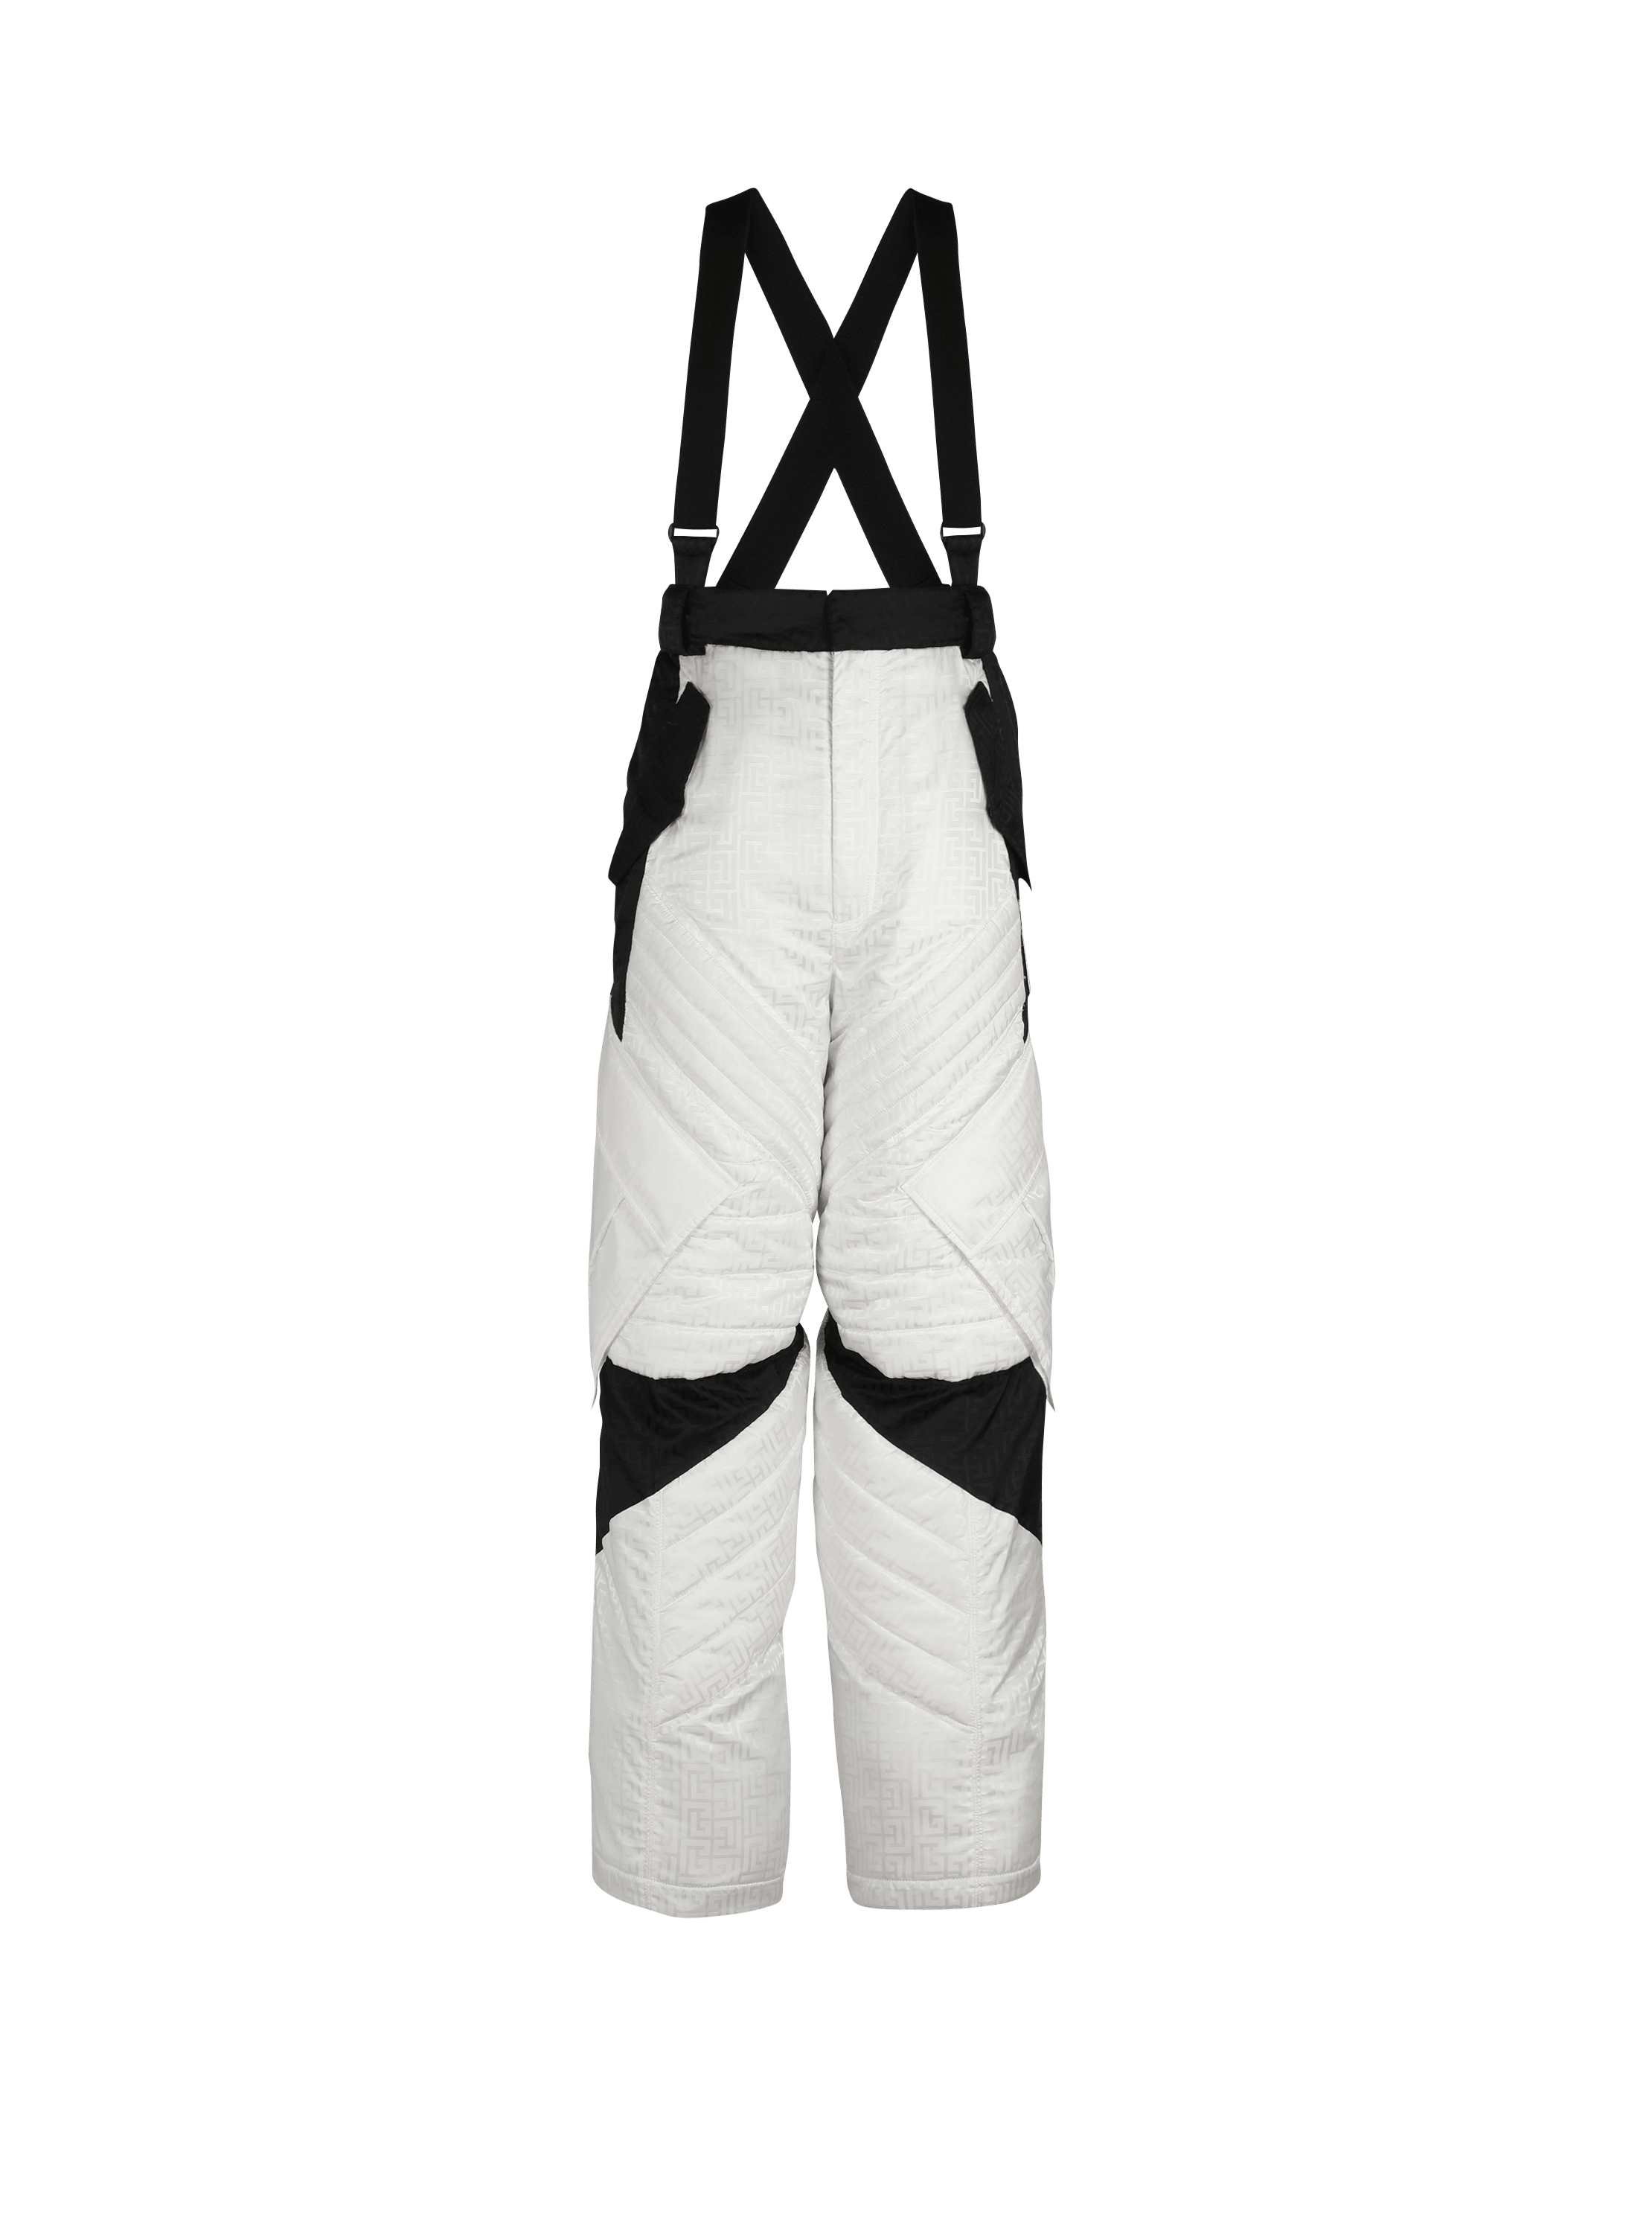 Balmain x Rossignol - Balmain monogram ski pants with straps, white, hi-res